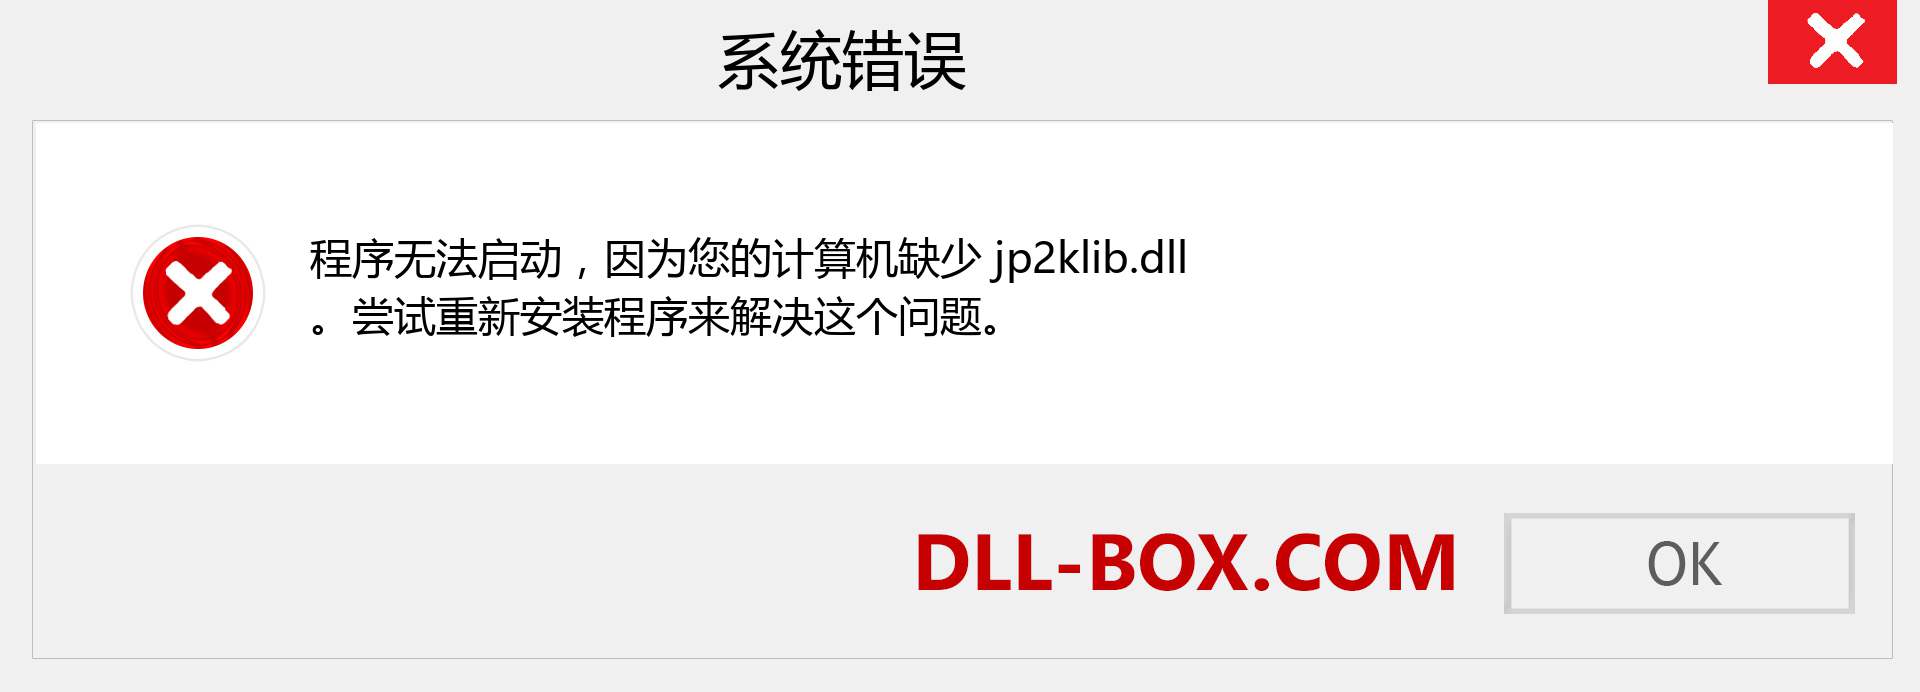 jp2klib.dll 文件丢失？。 适用于 Windows 7、8、10 的下载 - 修复 Windows、照片、图像上的 jp2klib dll 丢失错误